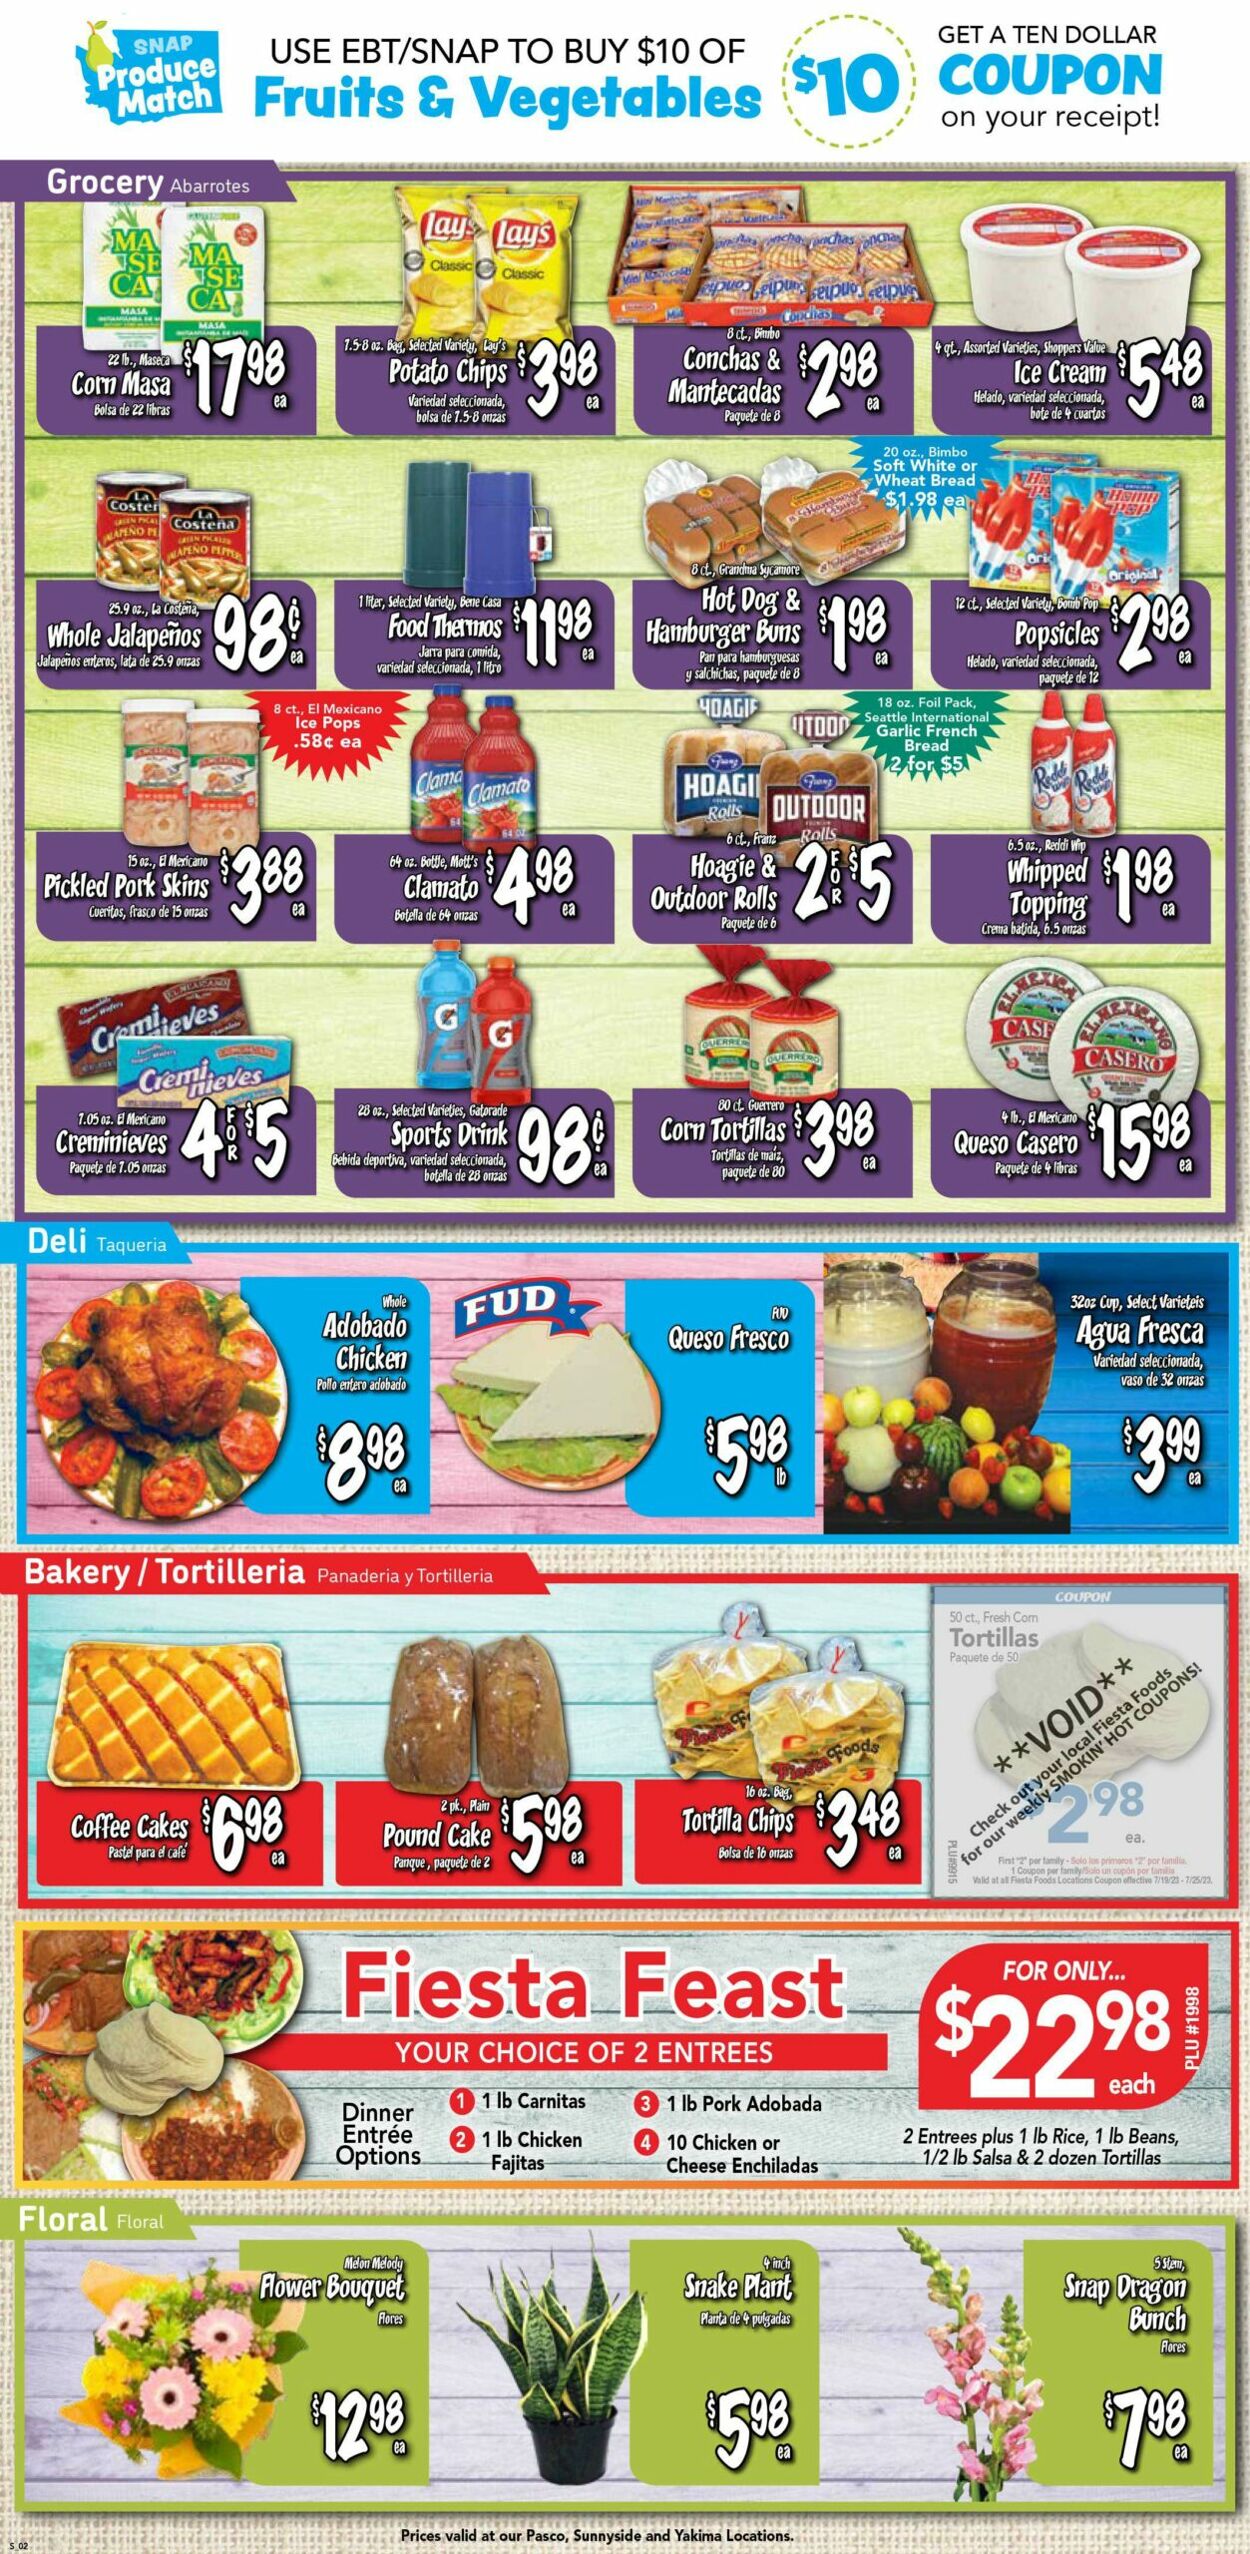 Catalogue Fiesta Foods SuperMarkets from 07/19/2023